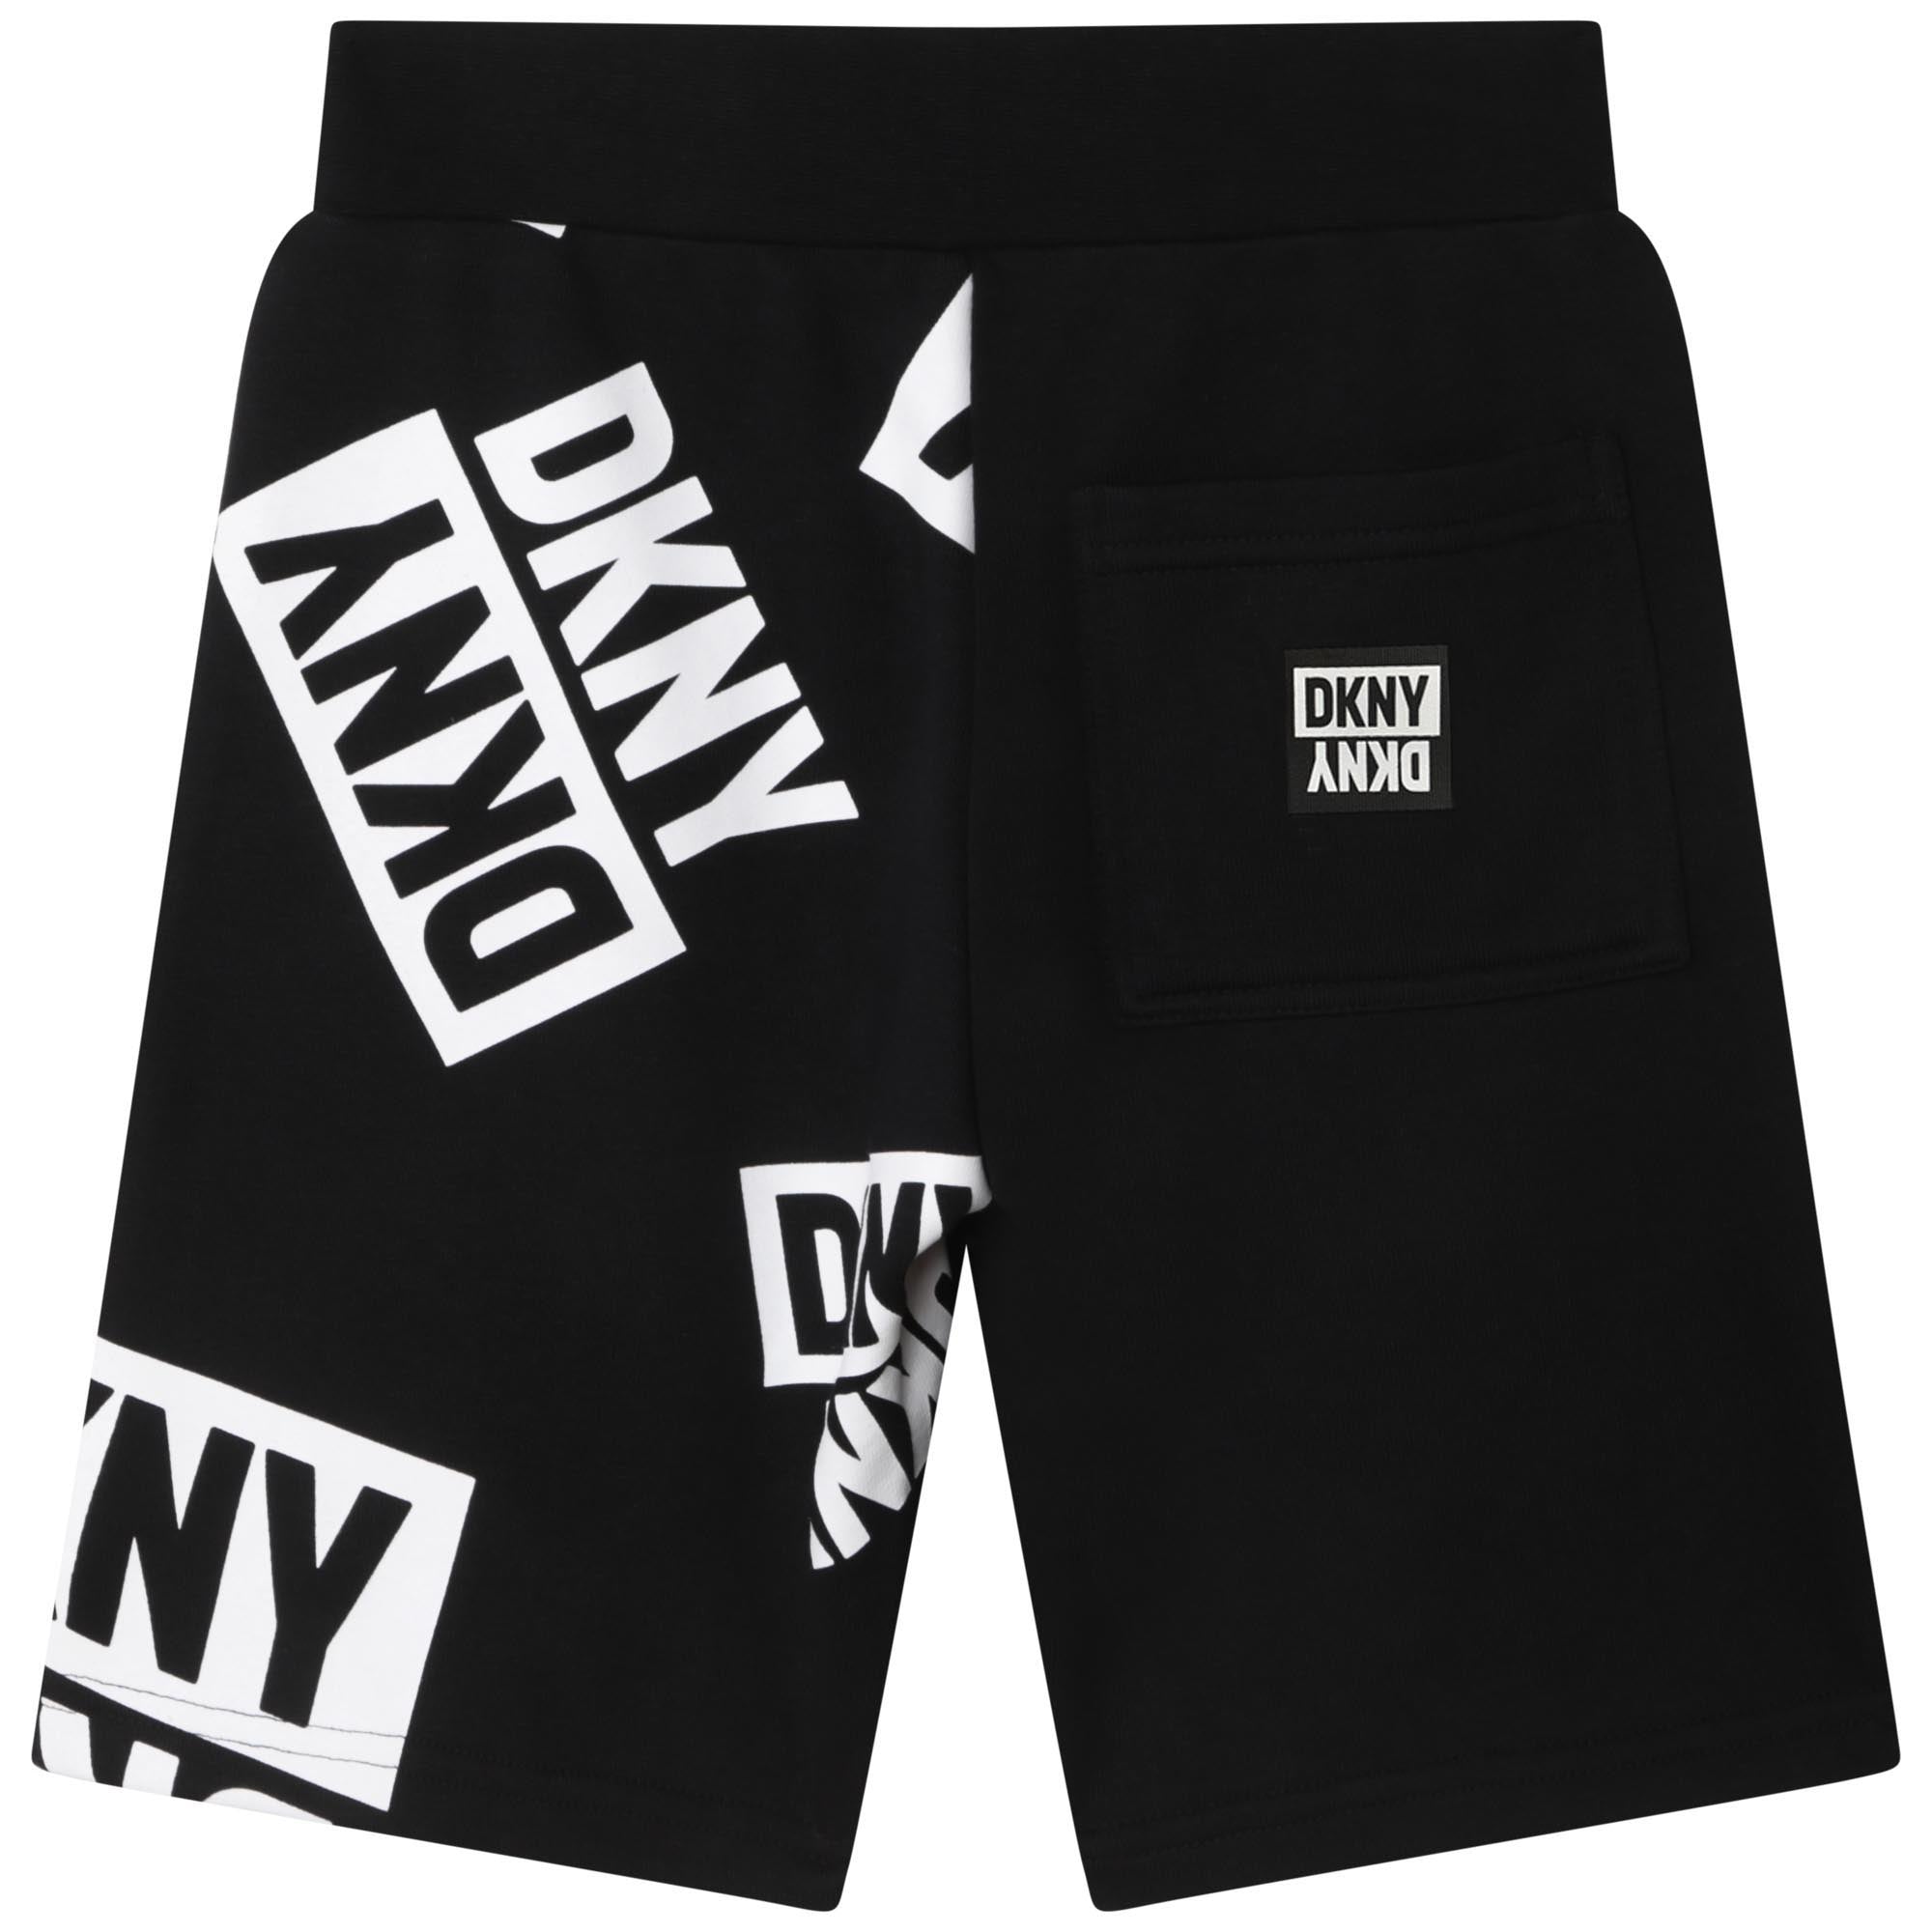 DKNY Bermuda Shorts Style: D24789